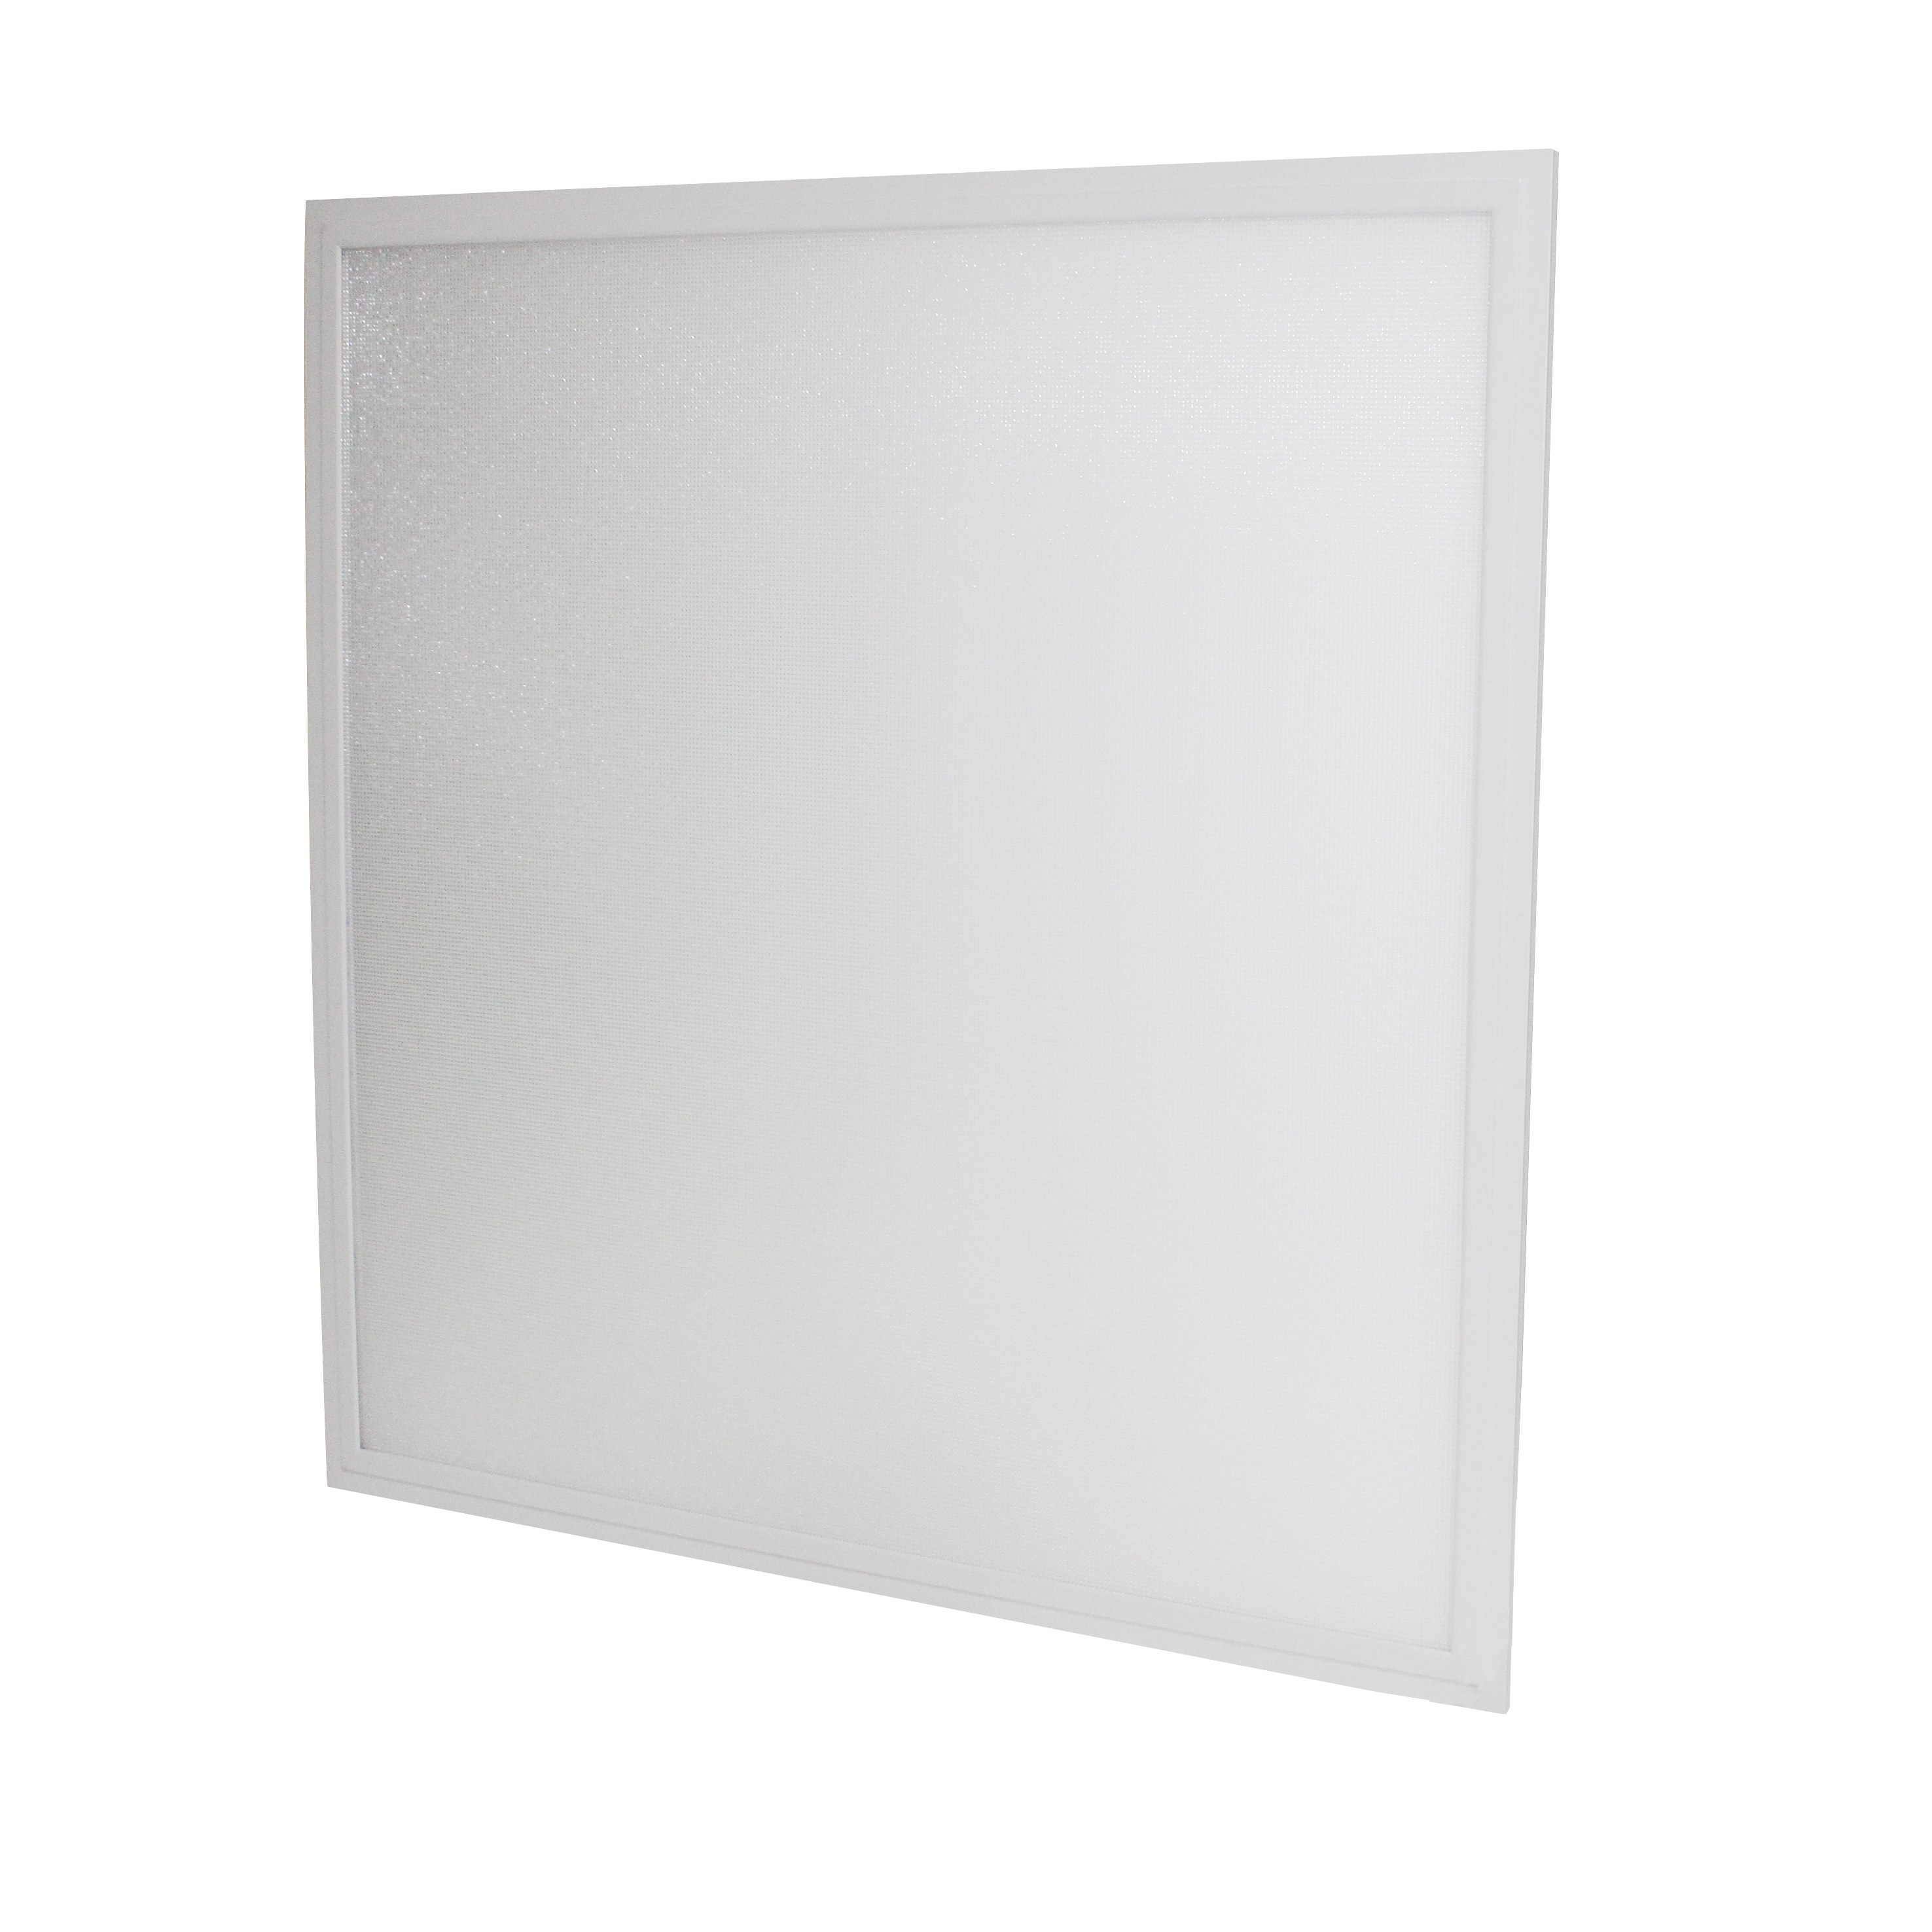 LED-Panel Multi Pro 2, 15-50 W, weiß, 860, 620x620mm, 130lm/W, UGR